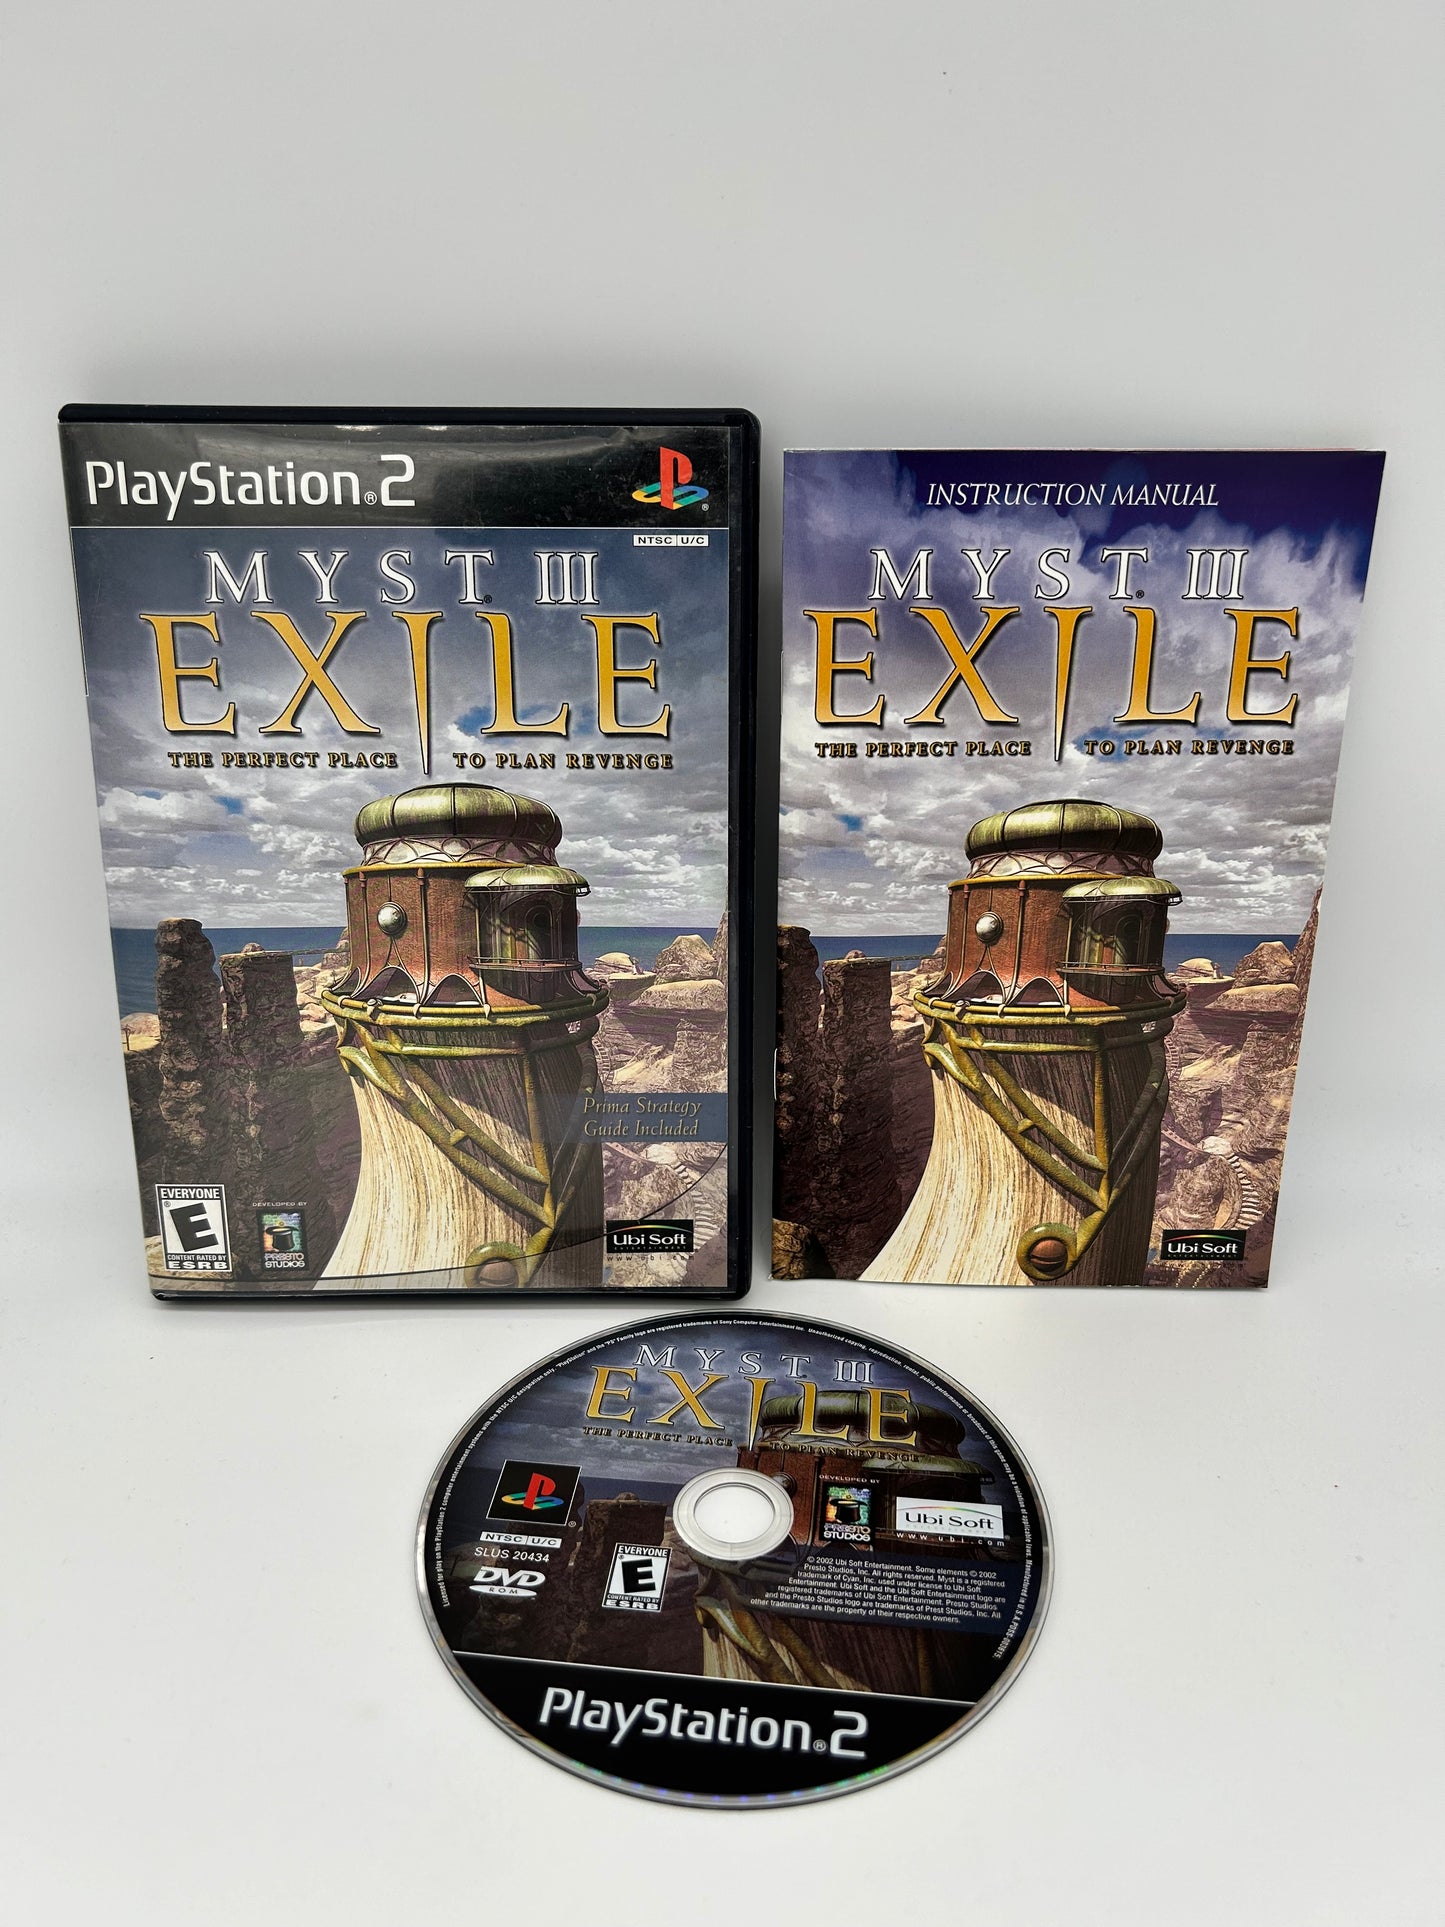 PiXEL-RETRO.COM : SONY PLAYSTATION 2 (PS2) COMPLET CIB BOX MANUAL GAME NTSC MYST III EXILE